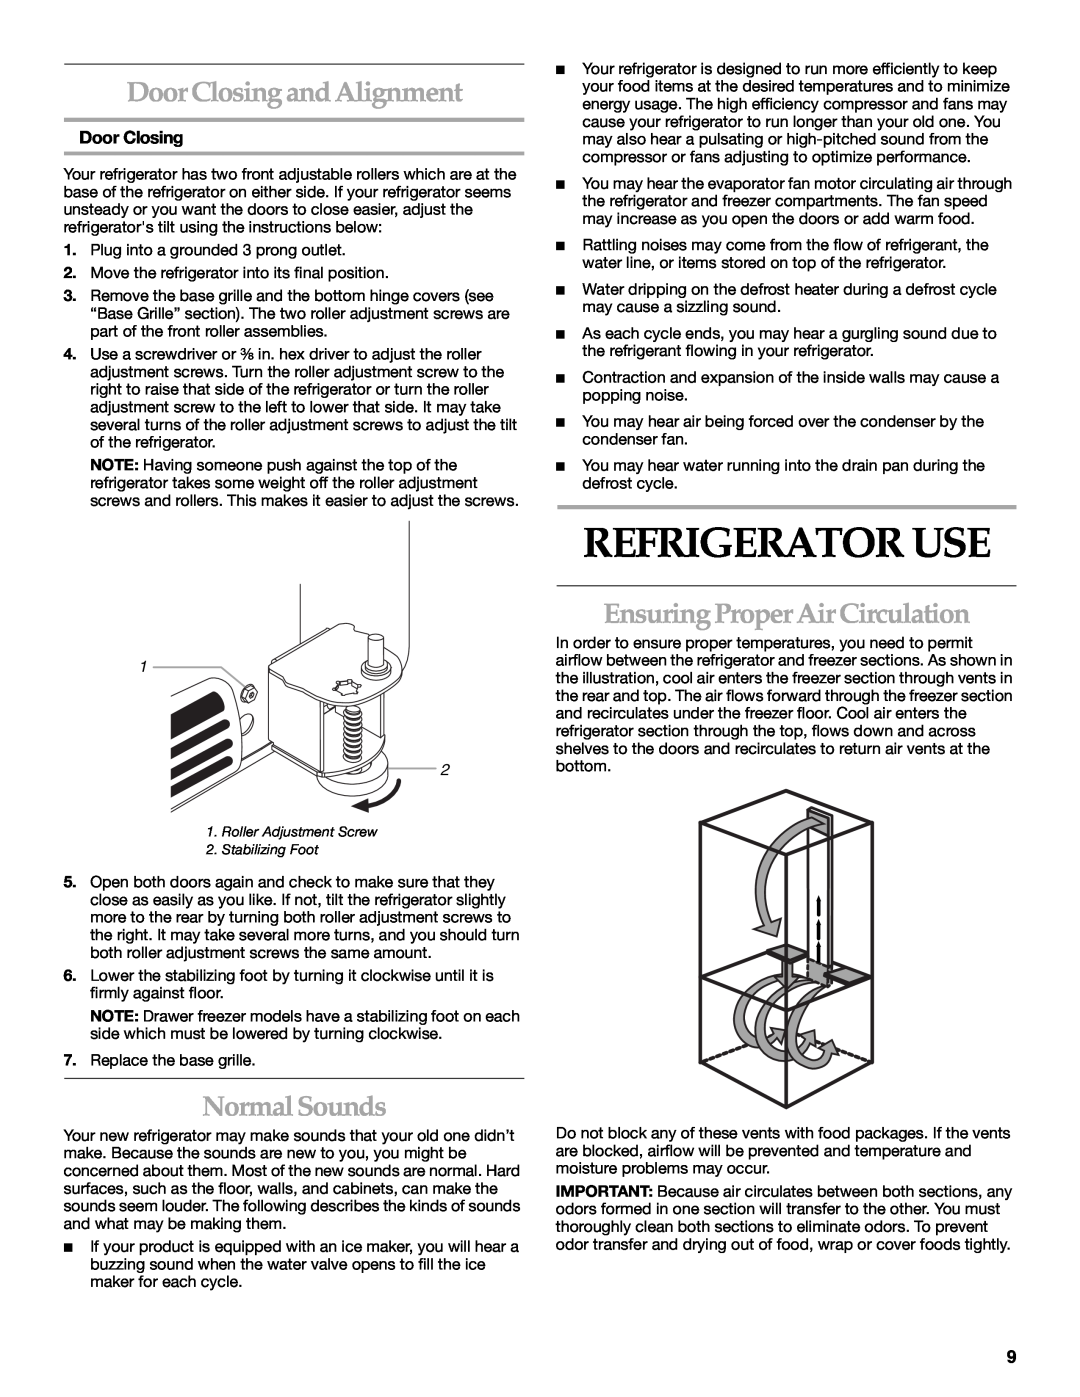 KitchenAid 12642708SP manual Refrigerator Use, Door Closing and Alignment, Normal Sounds, Ensuring Proper Air Circulation 